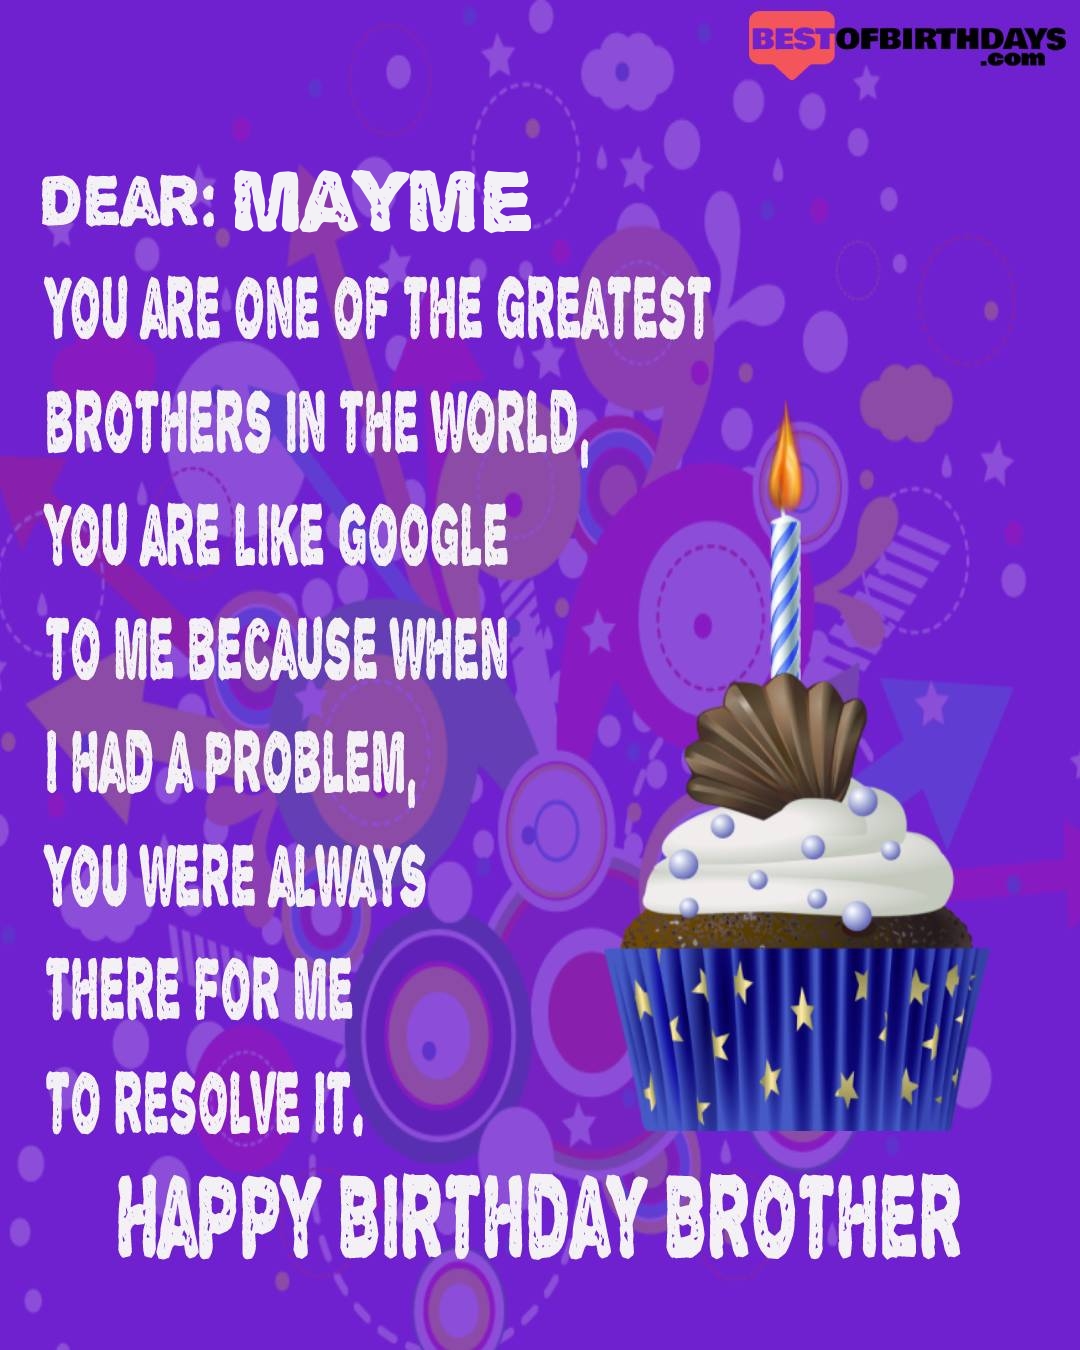 Happy birthday mayme bhai brother bro